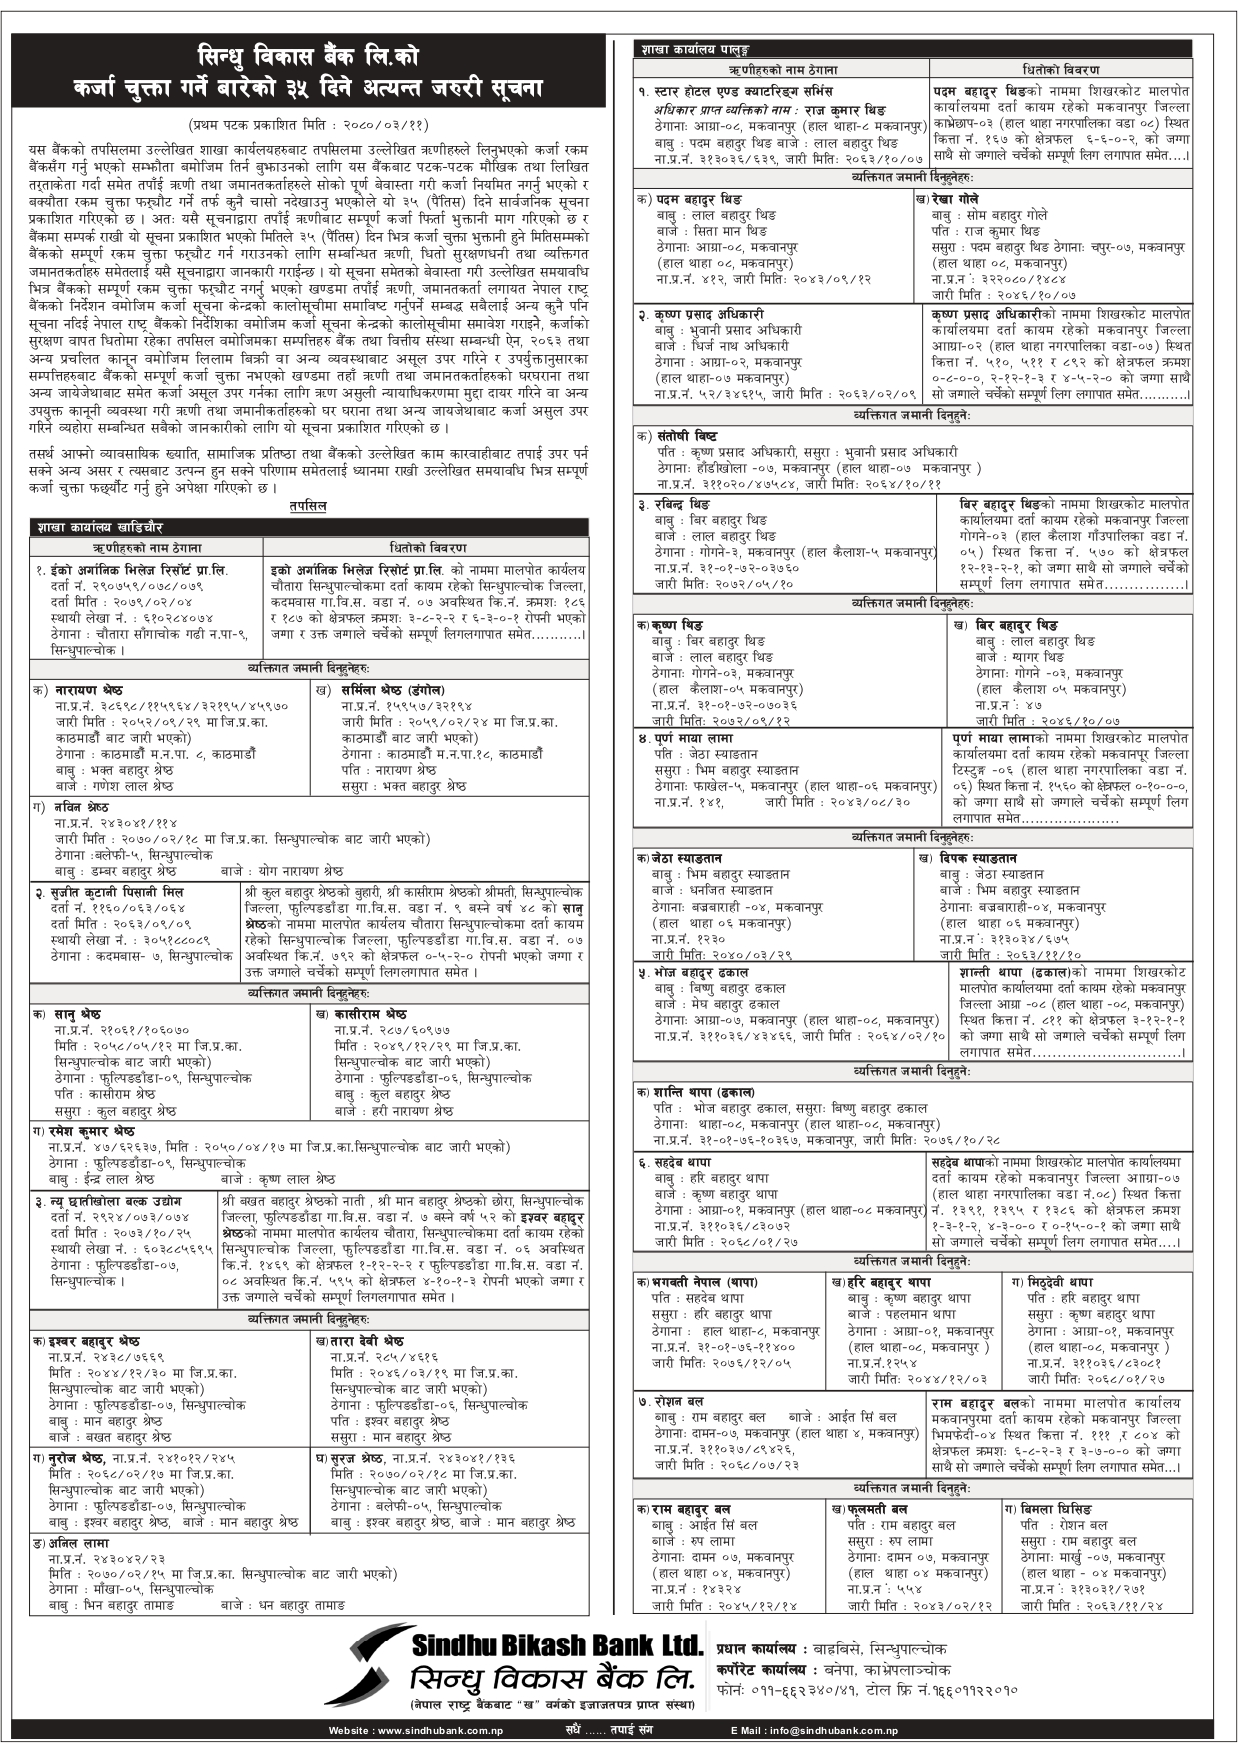 Sindu Bikas Bank_Palung & Khadichaur Branch 2080-3-10_FH11 (1)_page-0001 (1)